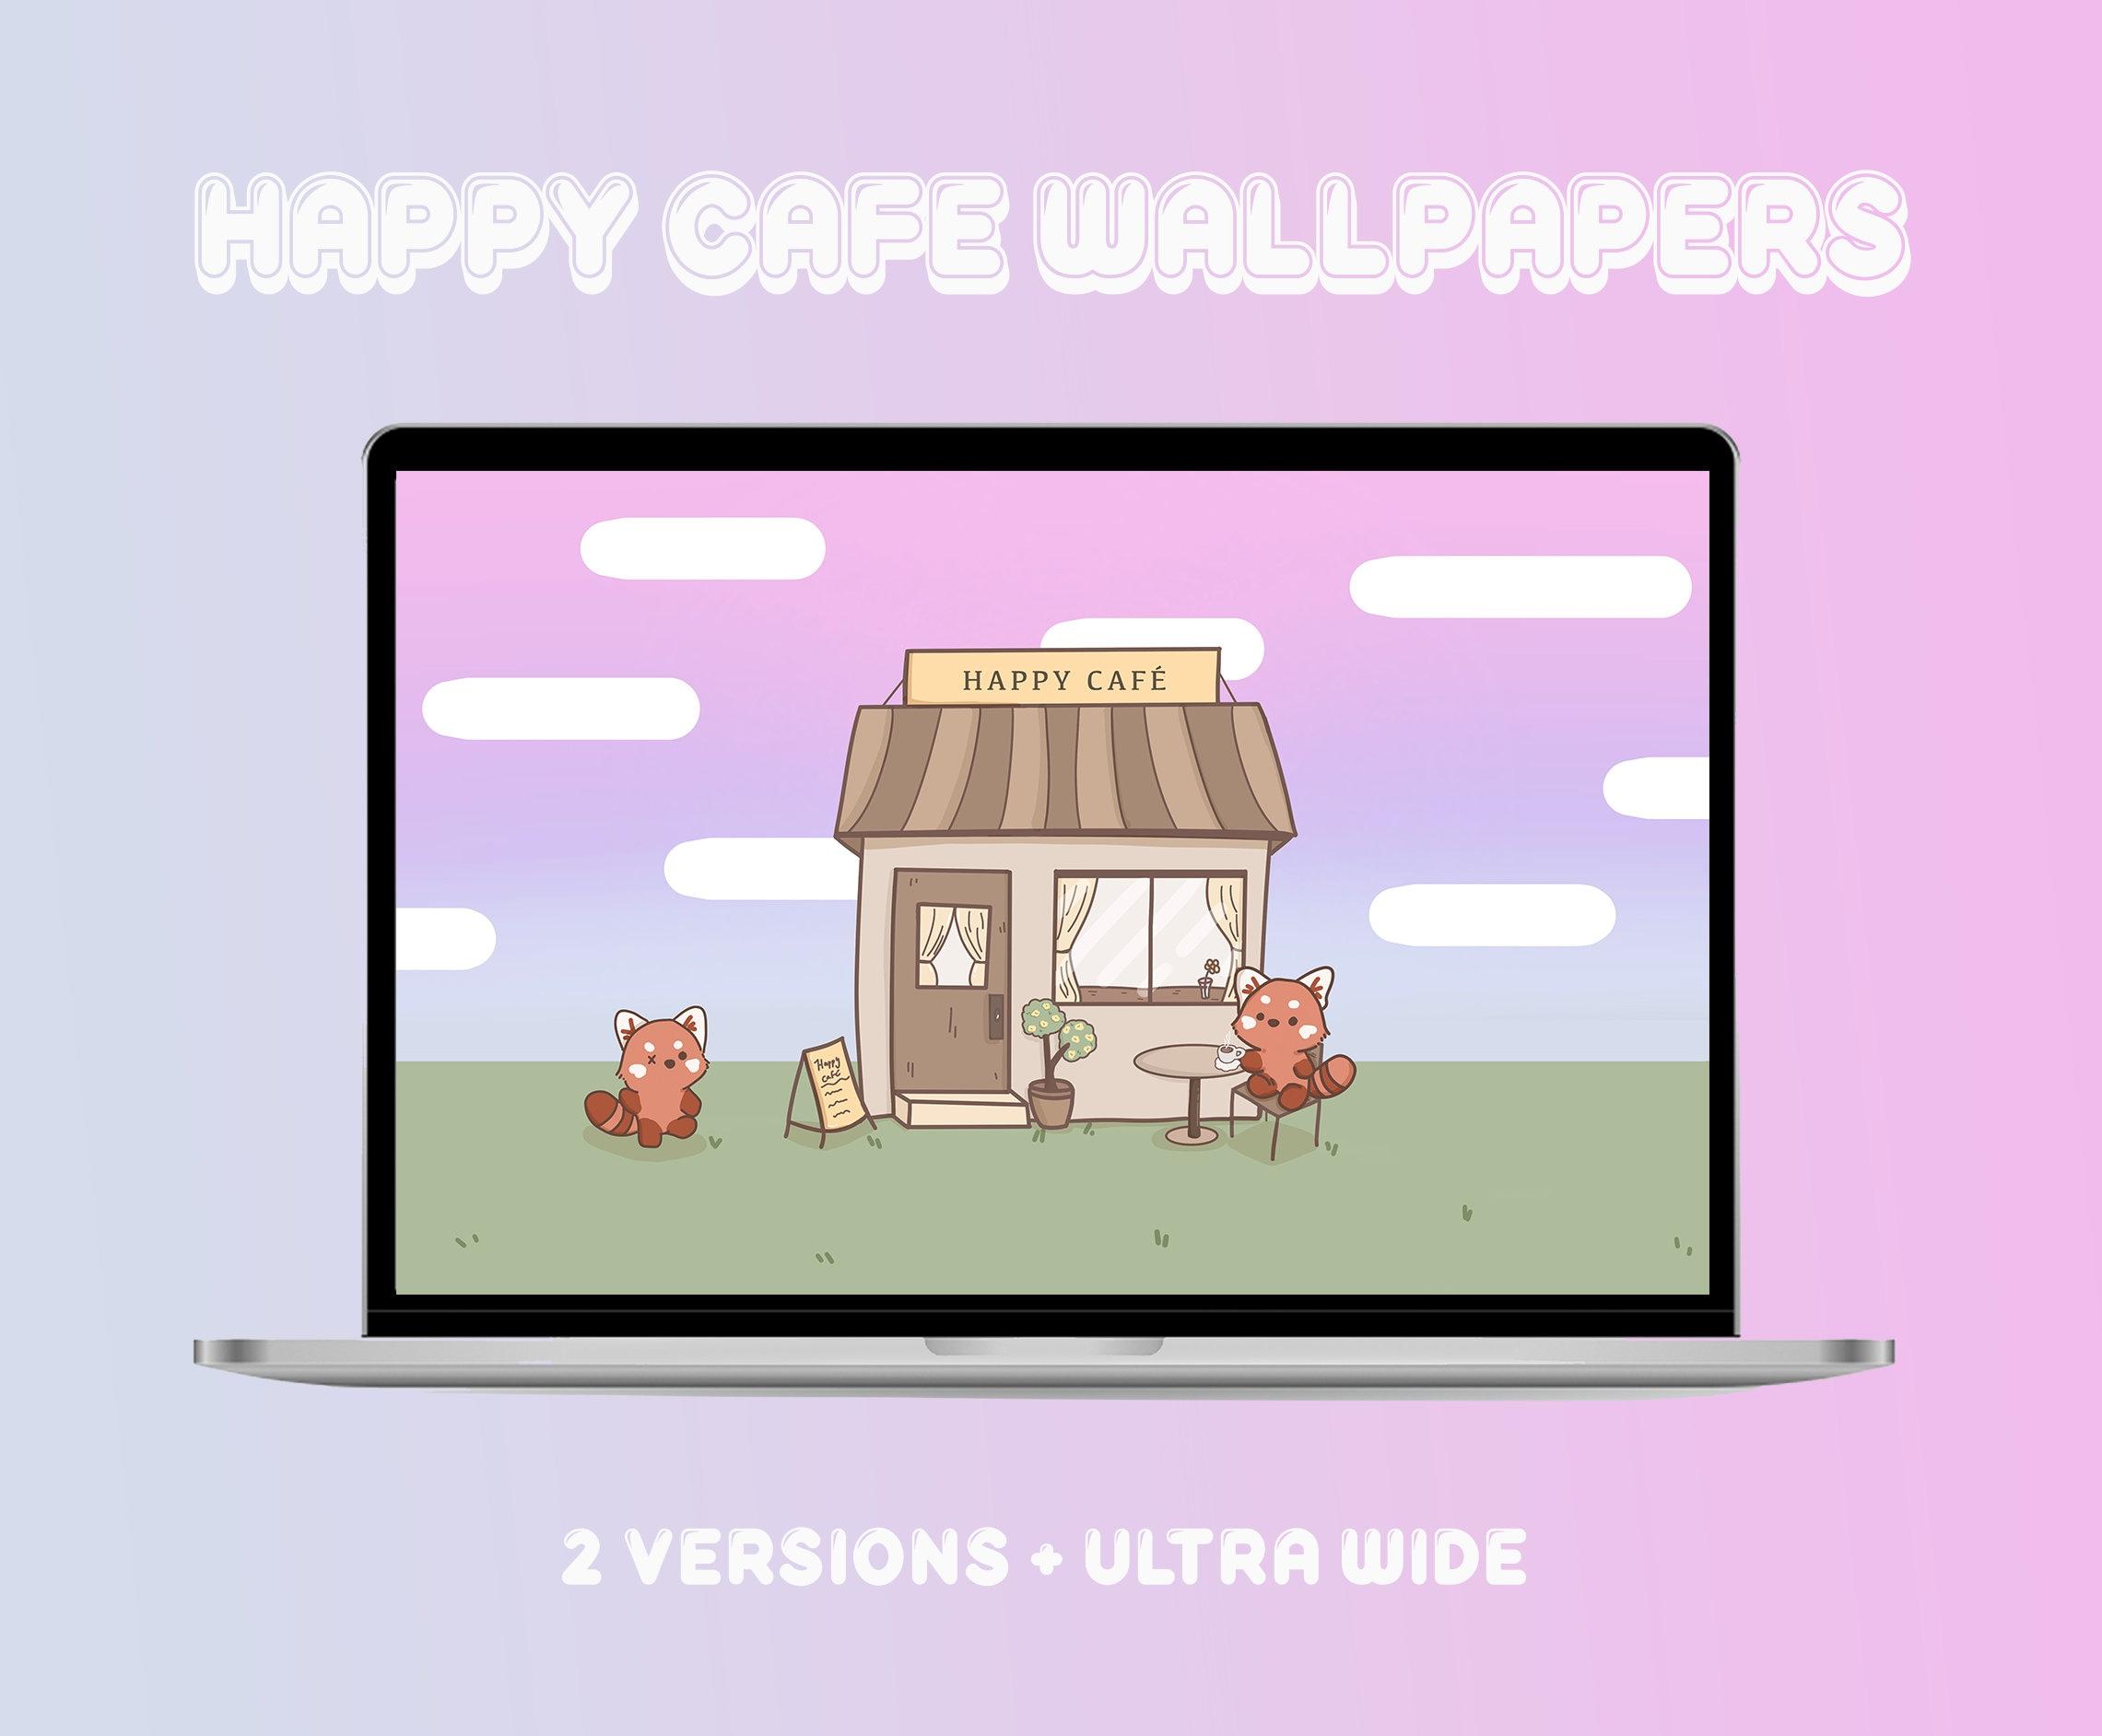 Happy Cafe Red Panda Wallpaper Desktop Ios Home Screen Lock